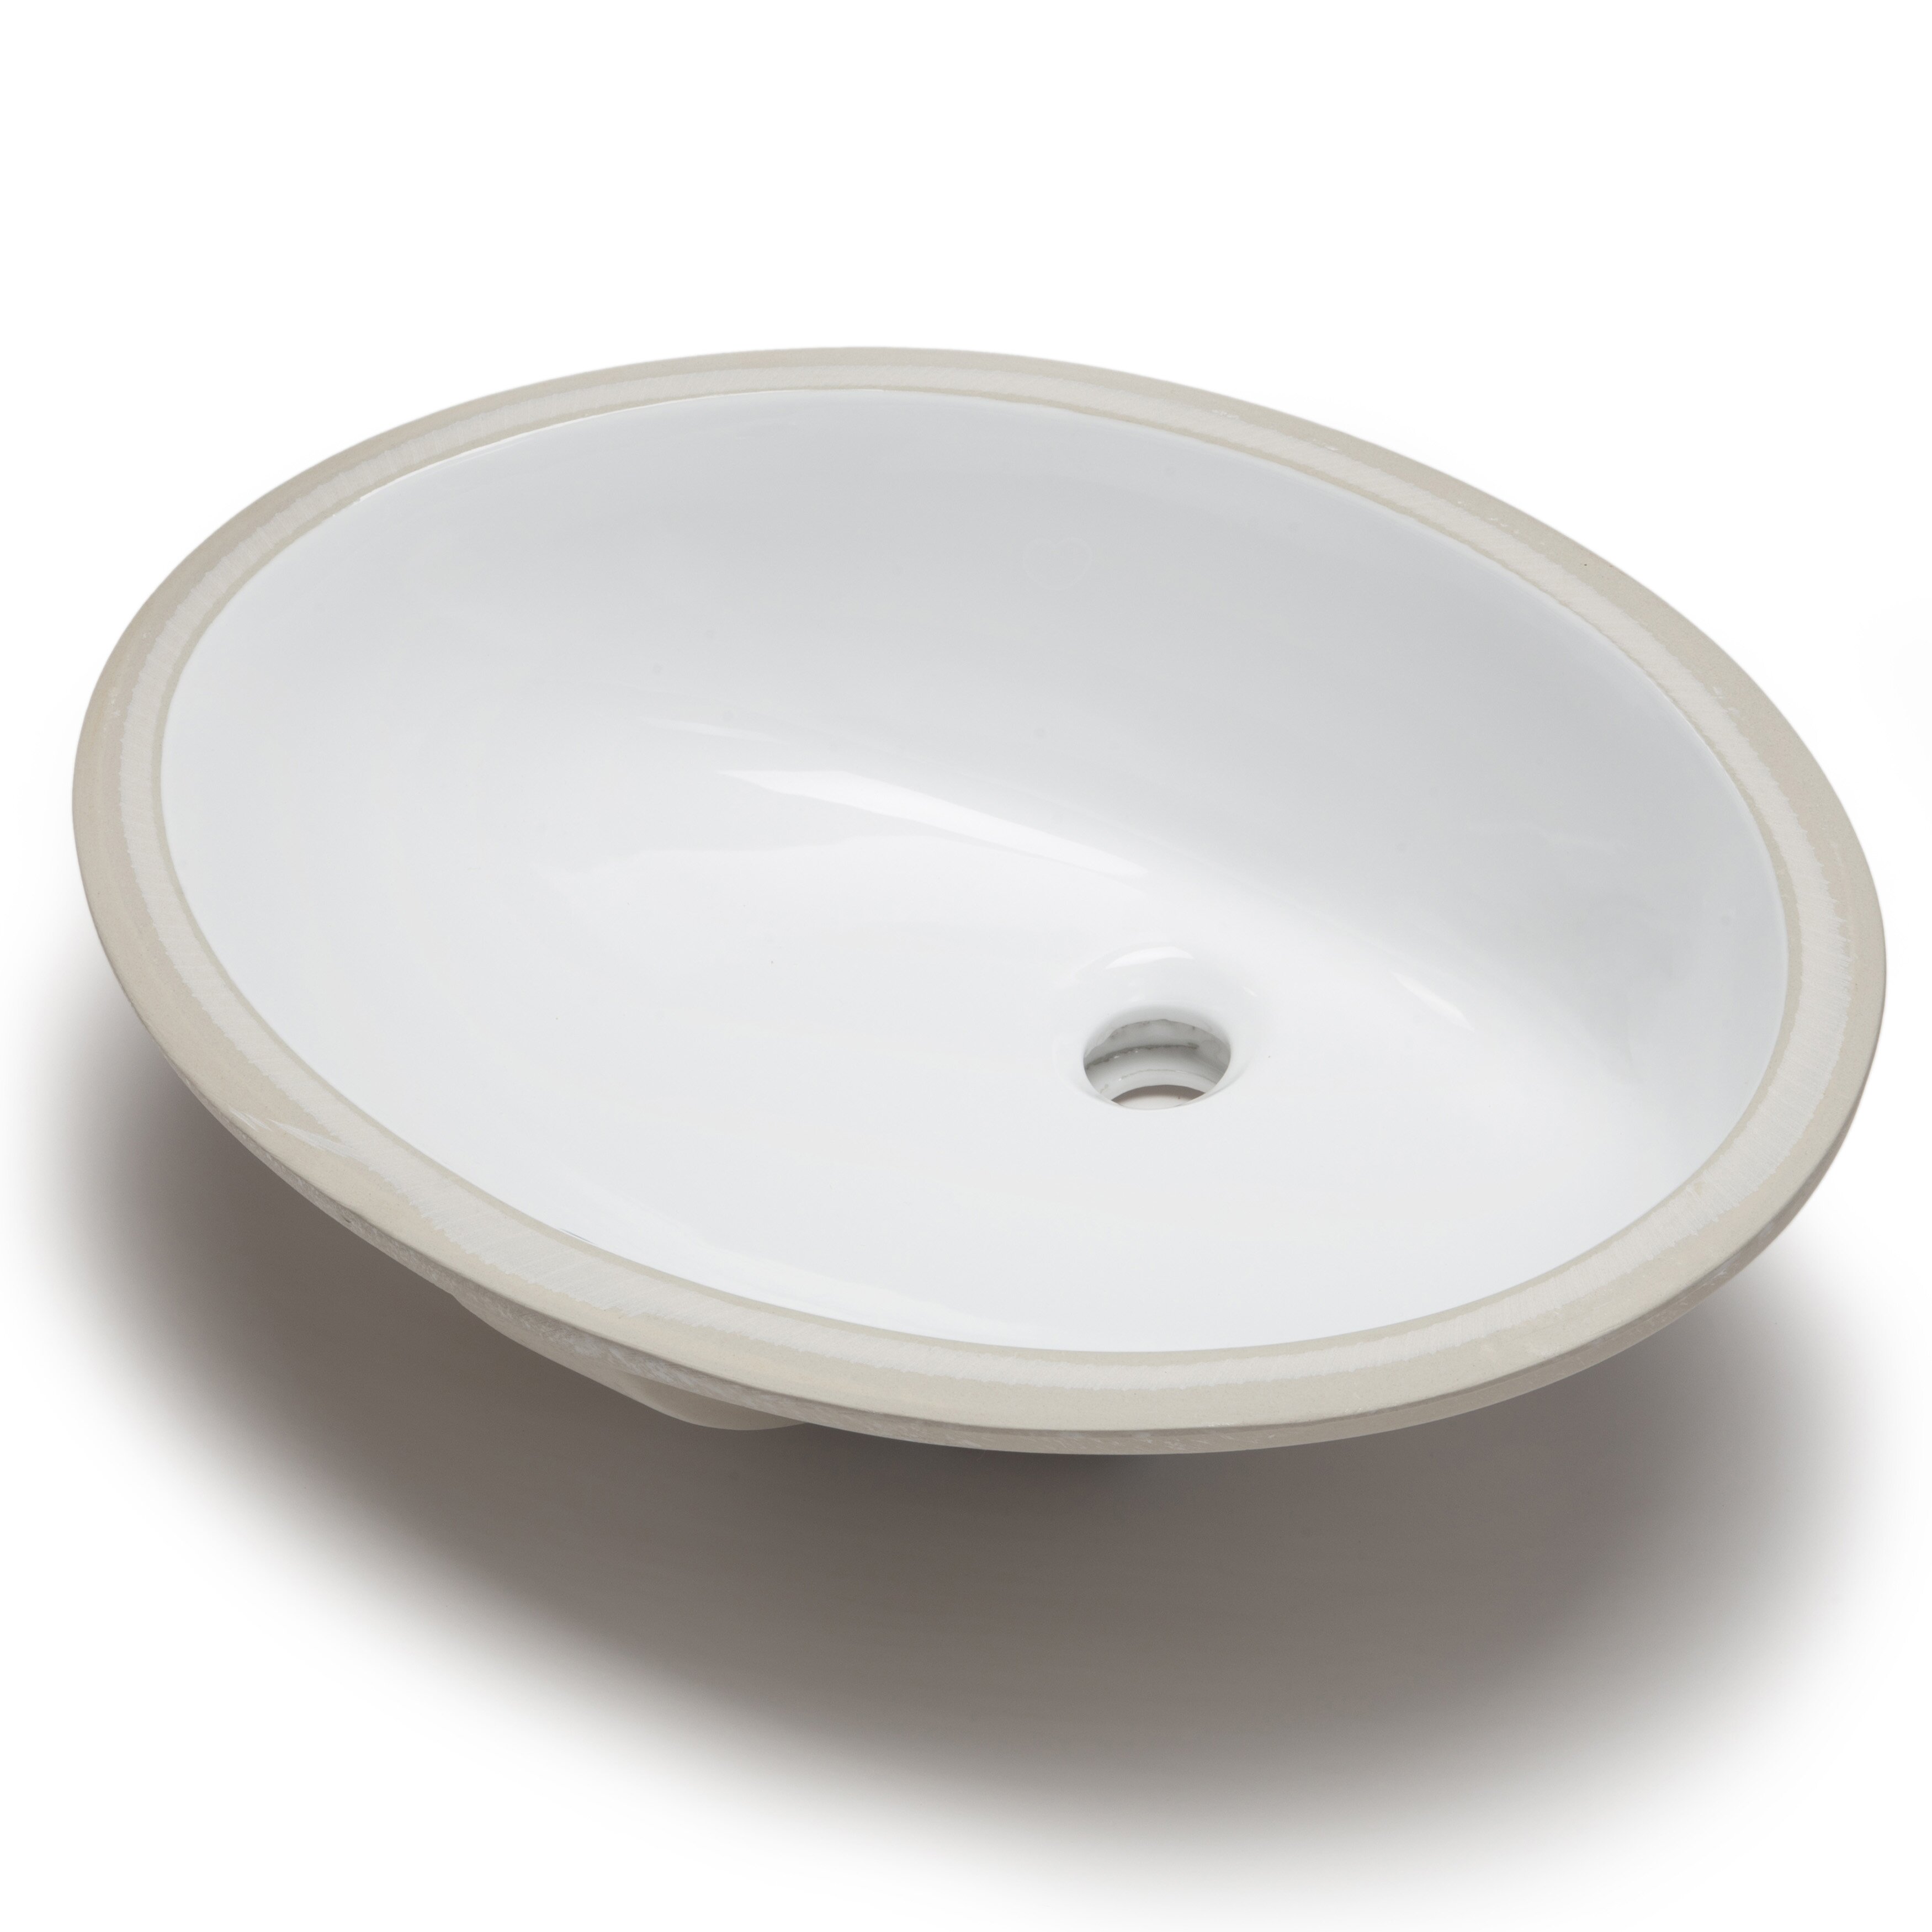 Bathroom Sink Bowls pebble glass bowl vessel bathroom sink